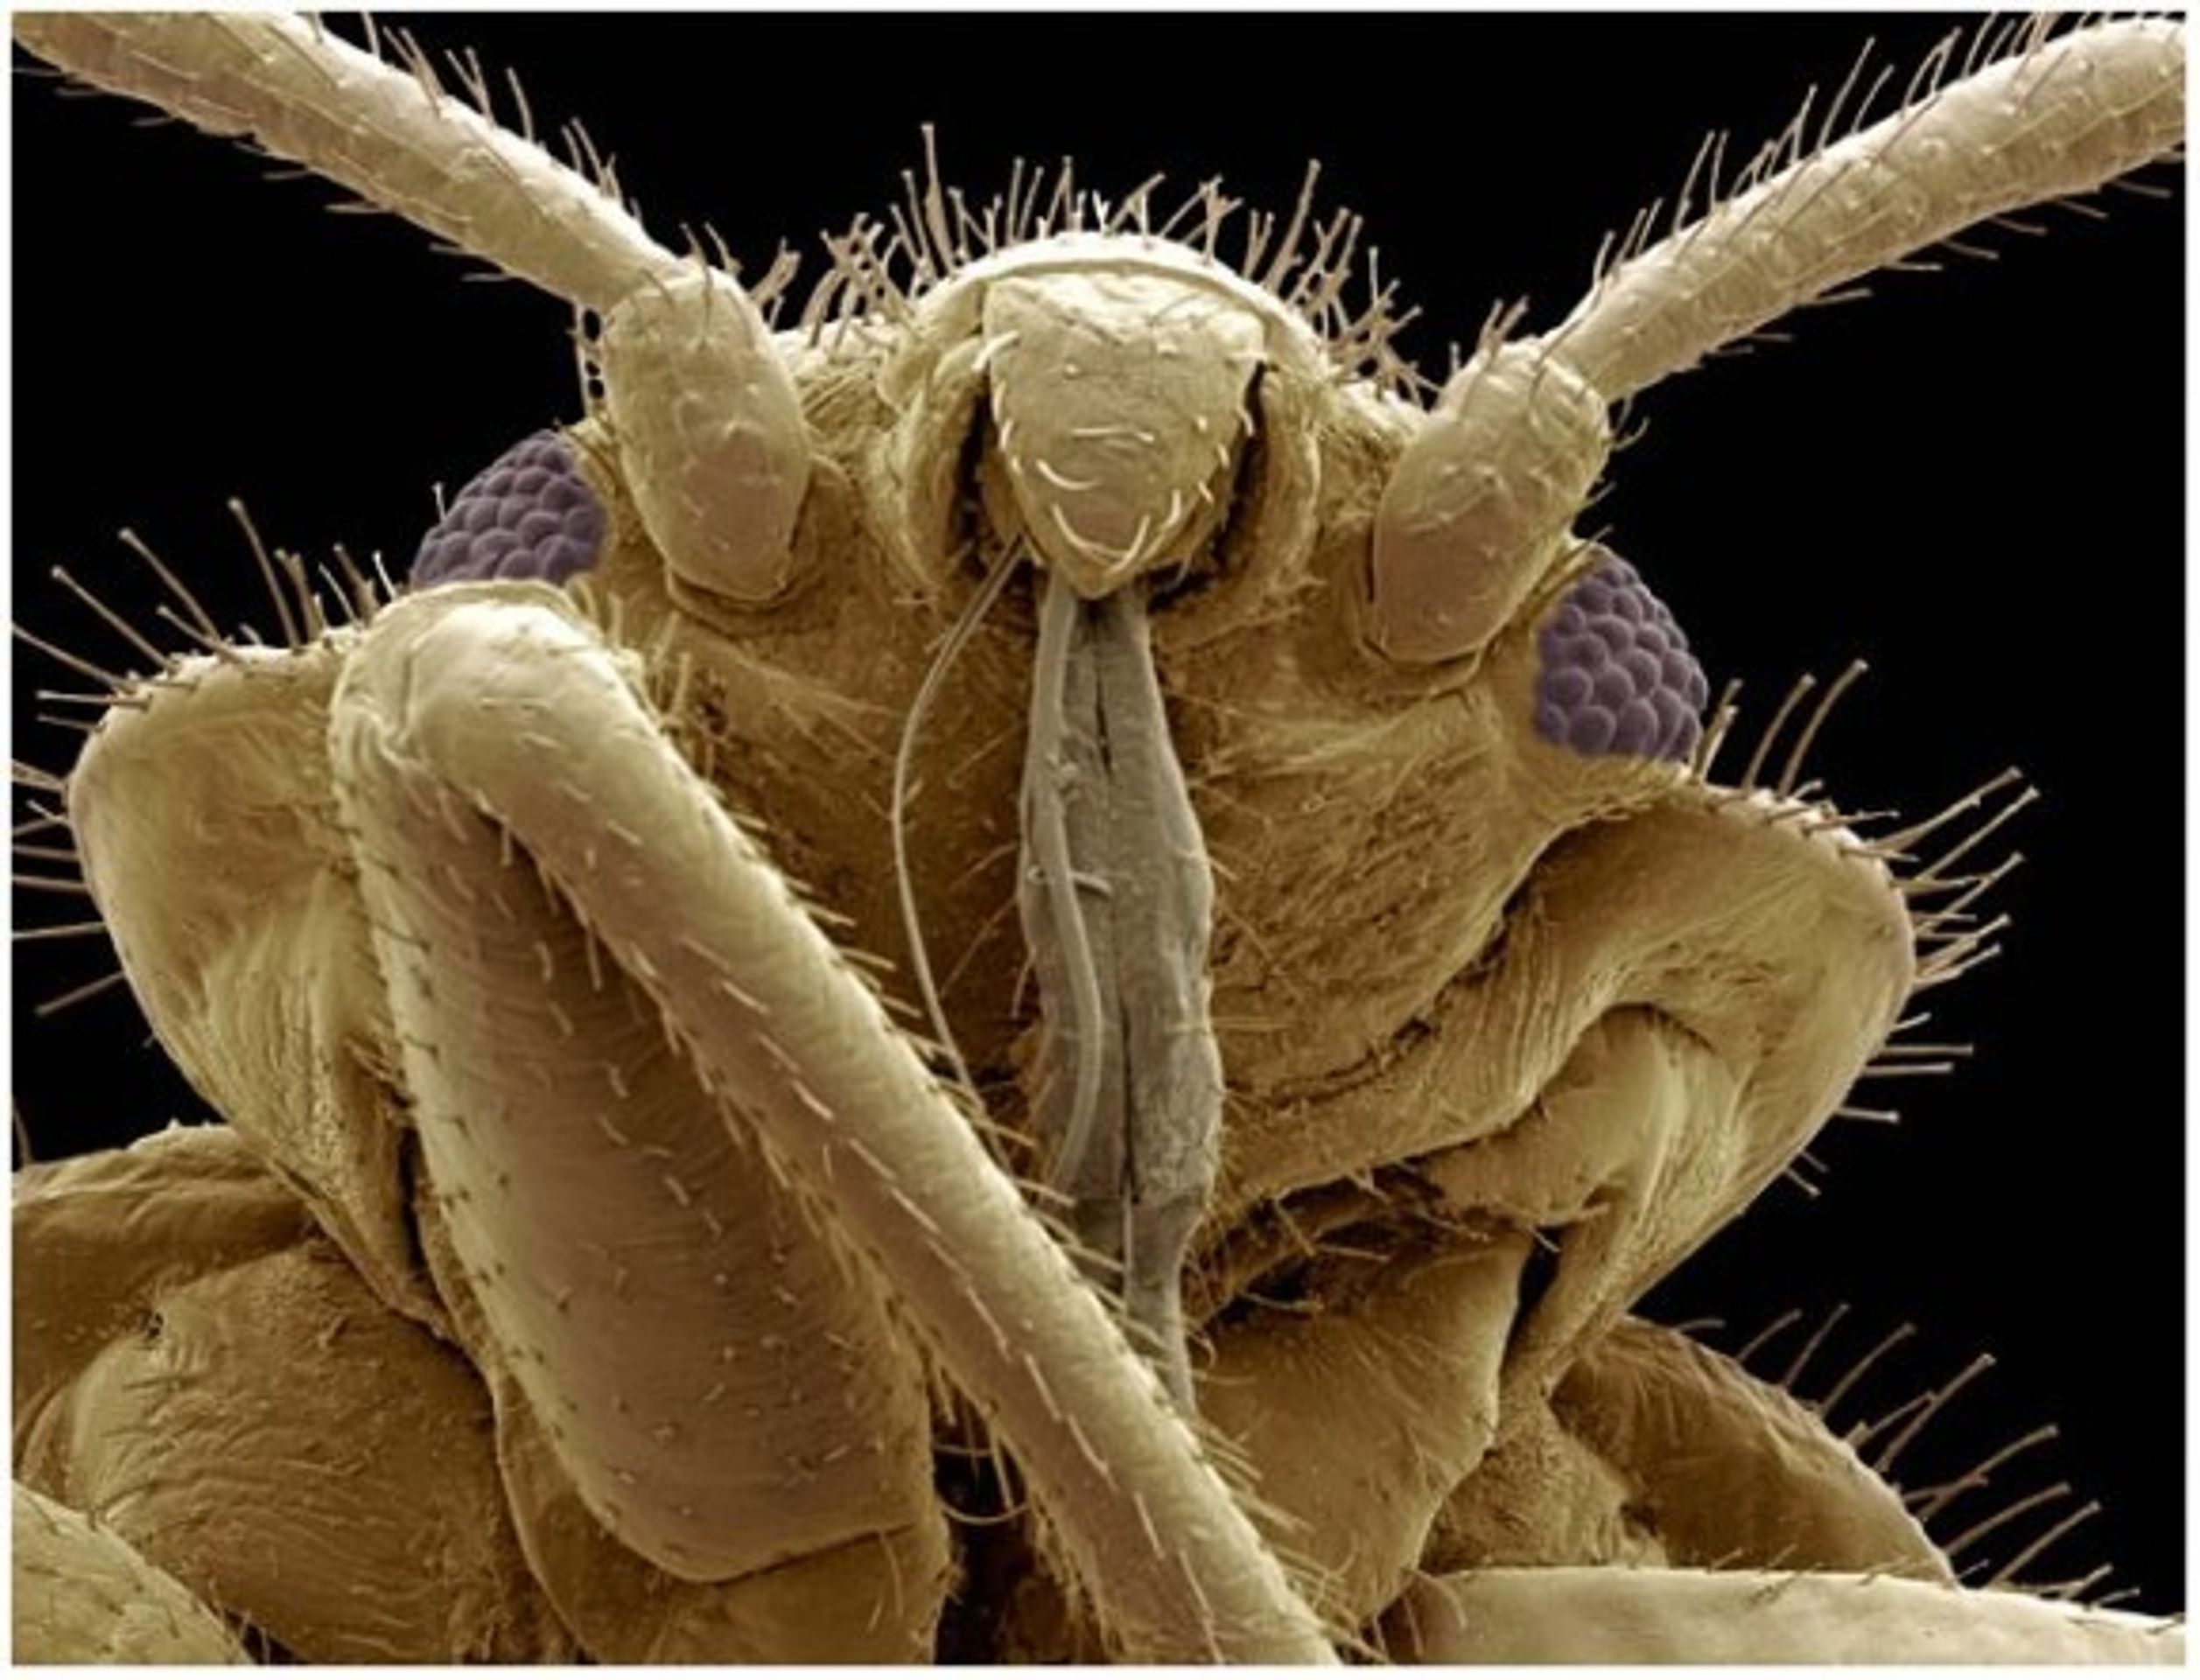 Hmyz pod elektronovým mikroskopem - 4 - GALERIE: Hmyz pod elektronovým mikroskopem (18/20)